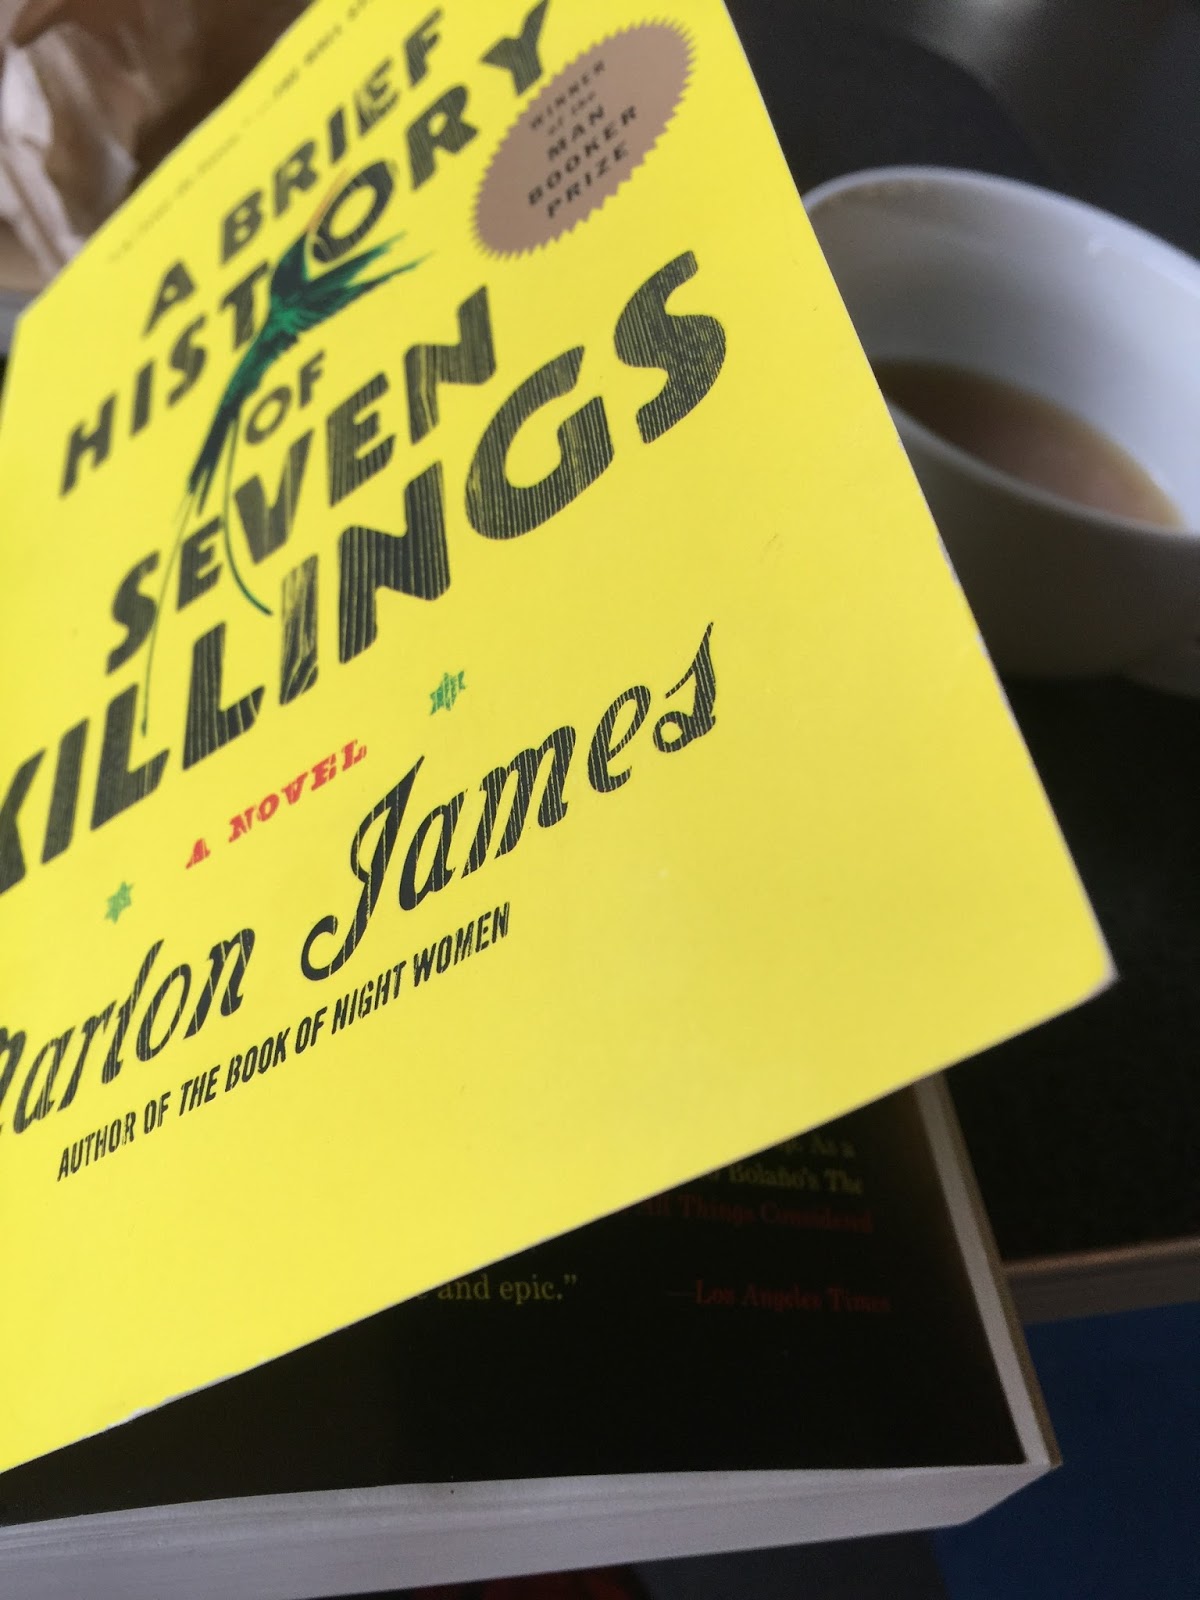 Marlon James and his not-so-brief history…